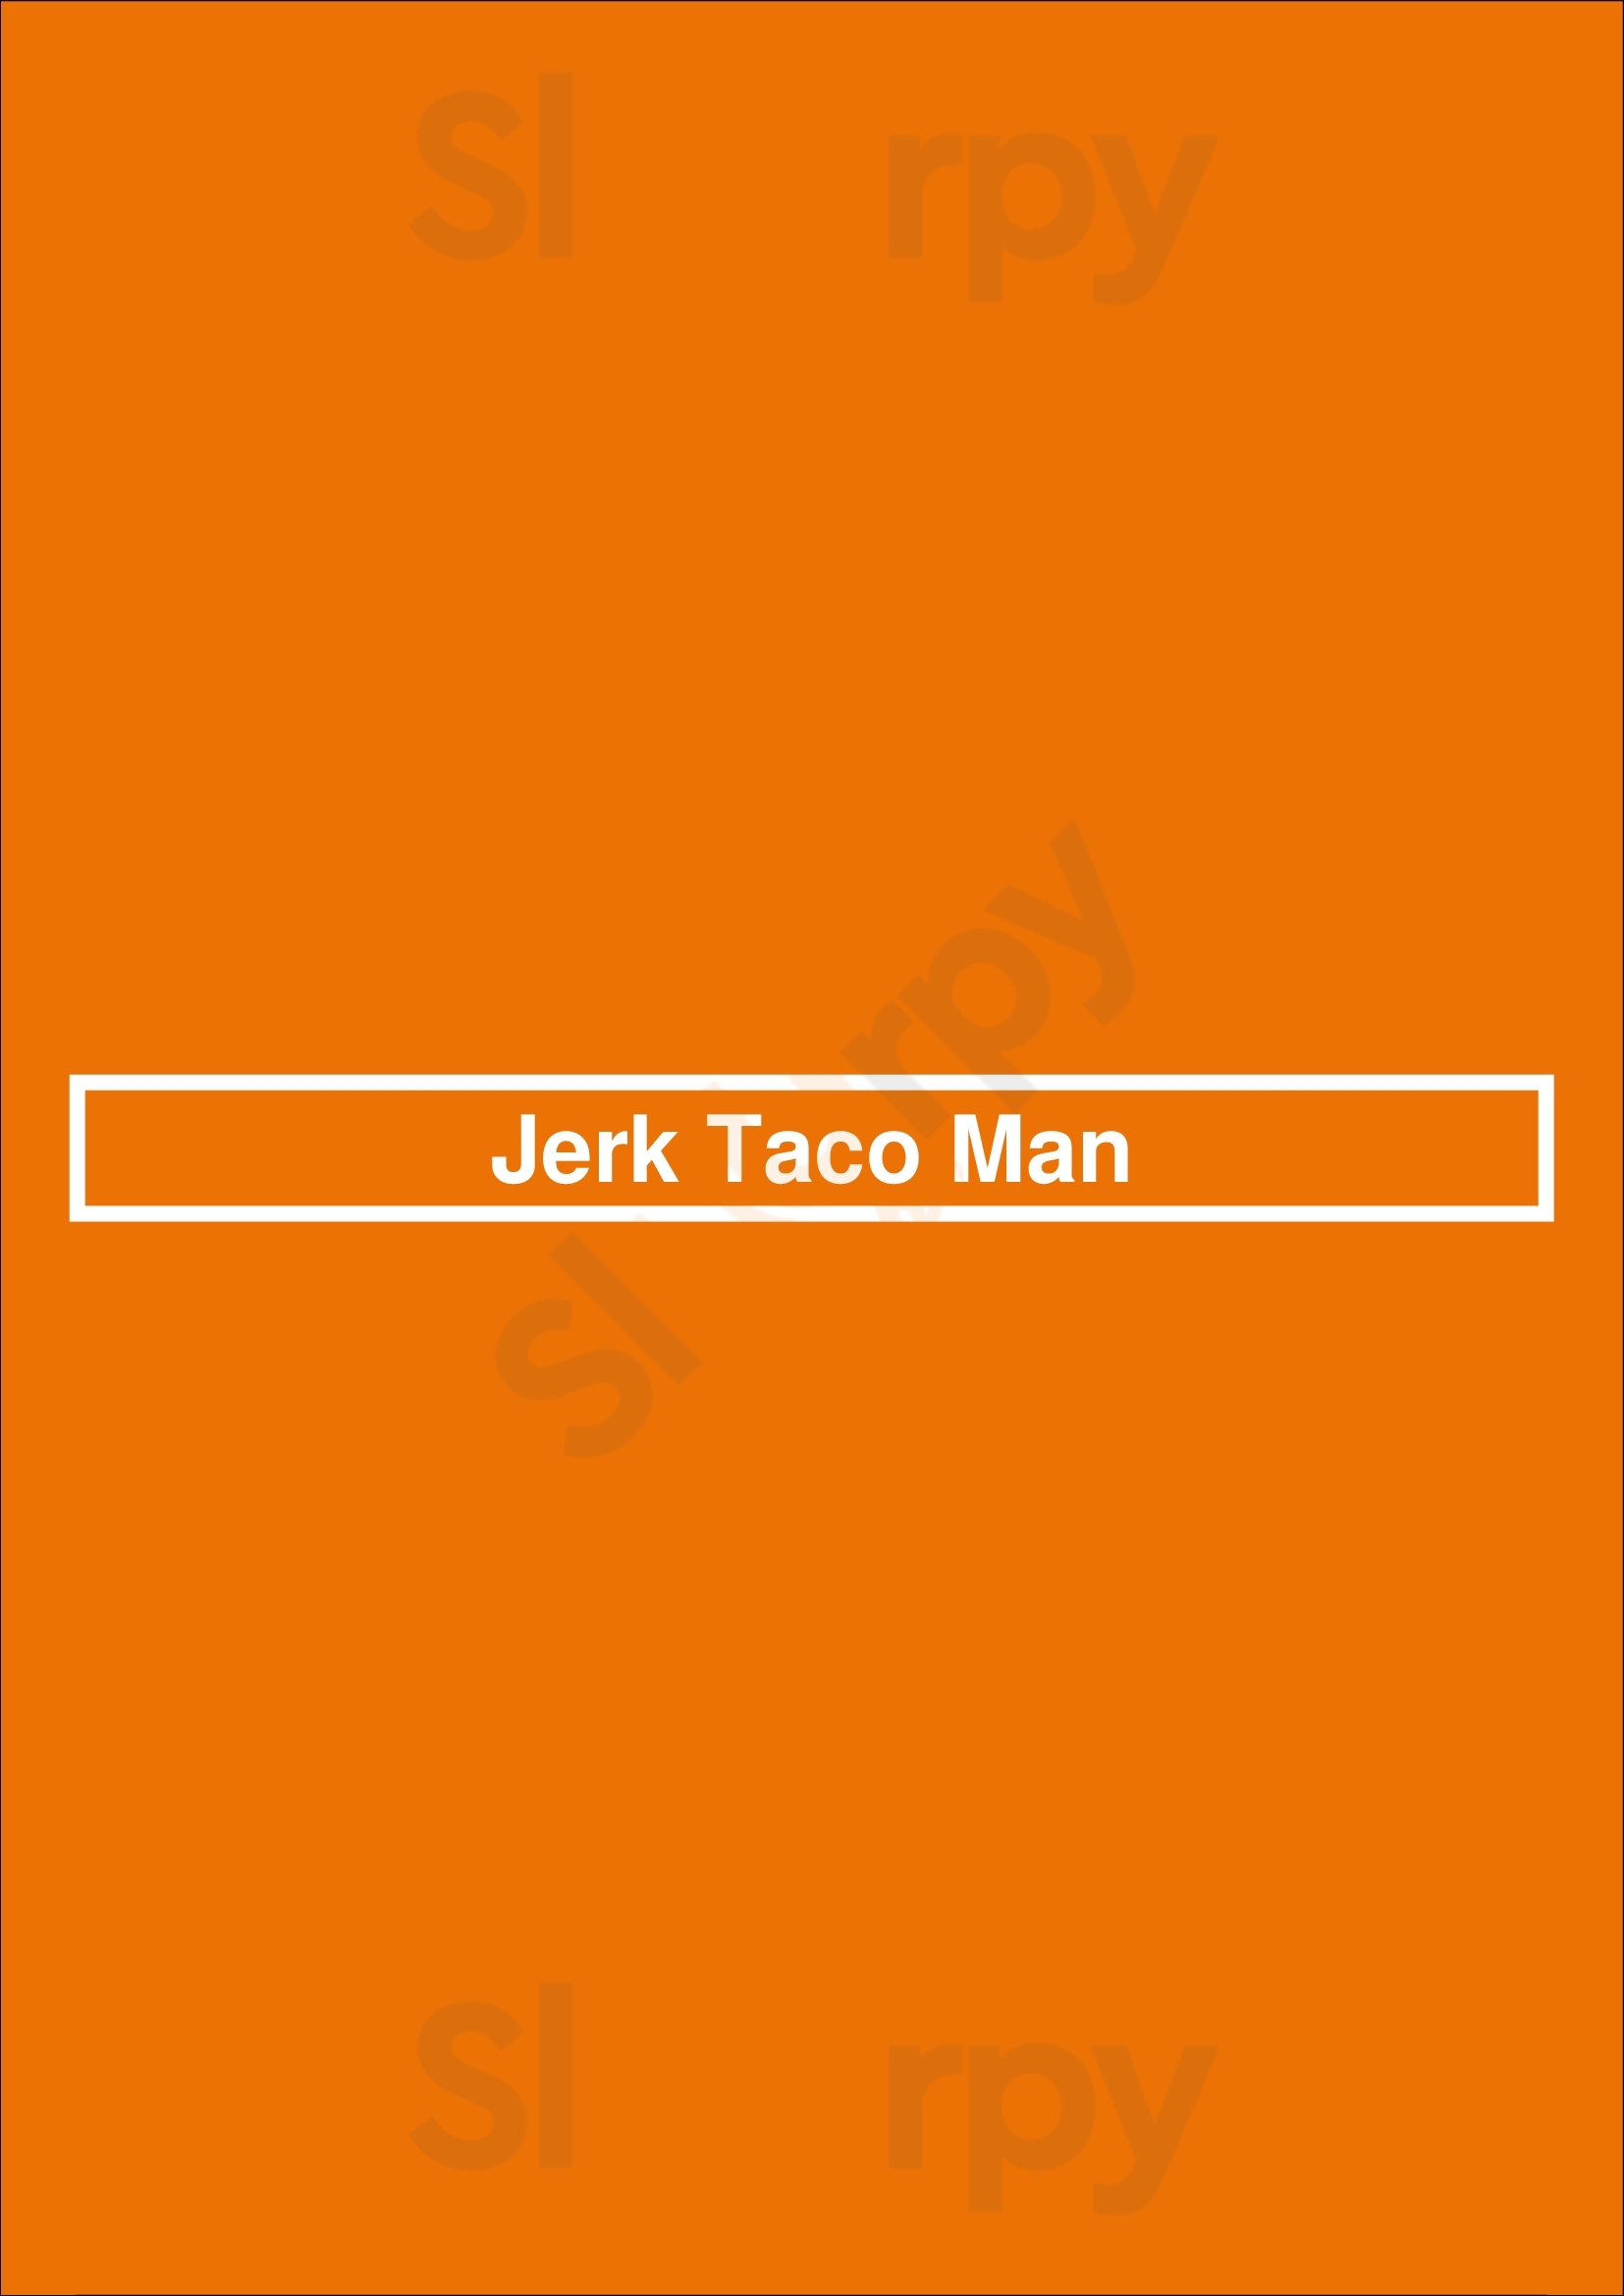 Jerk Taco Man Chicago Menu - 1